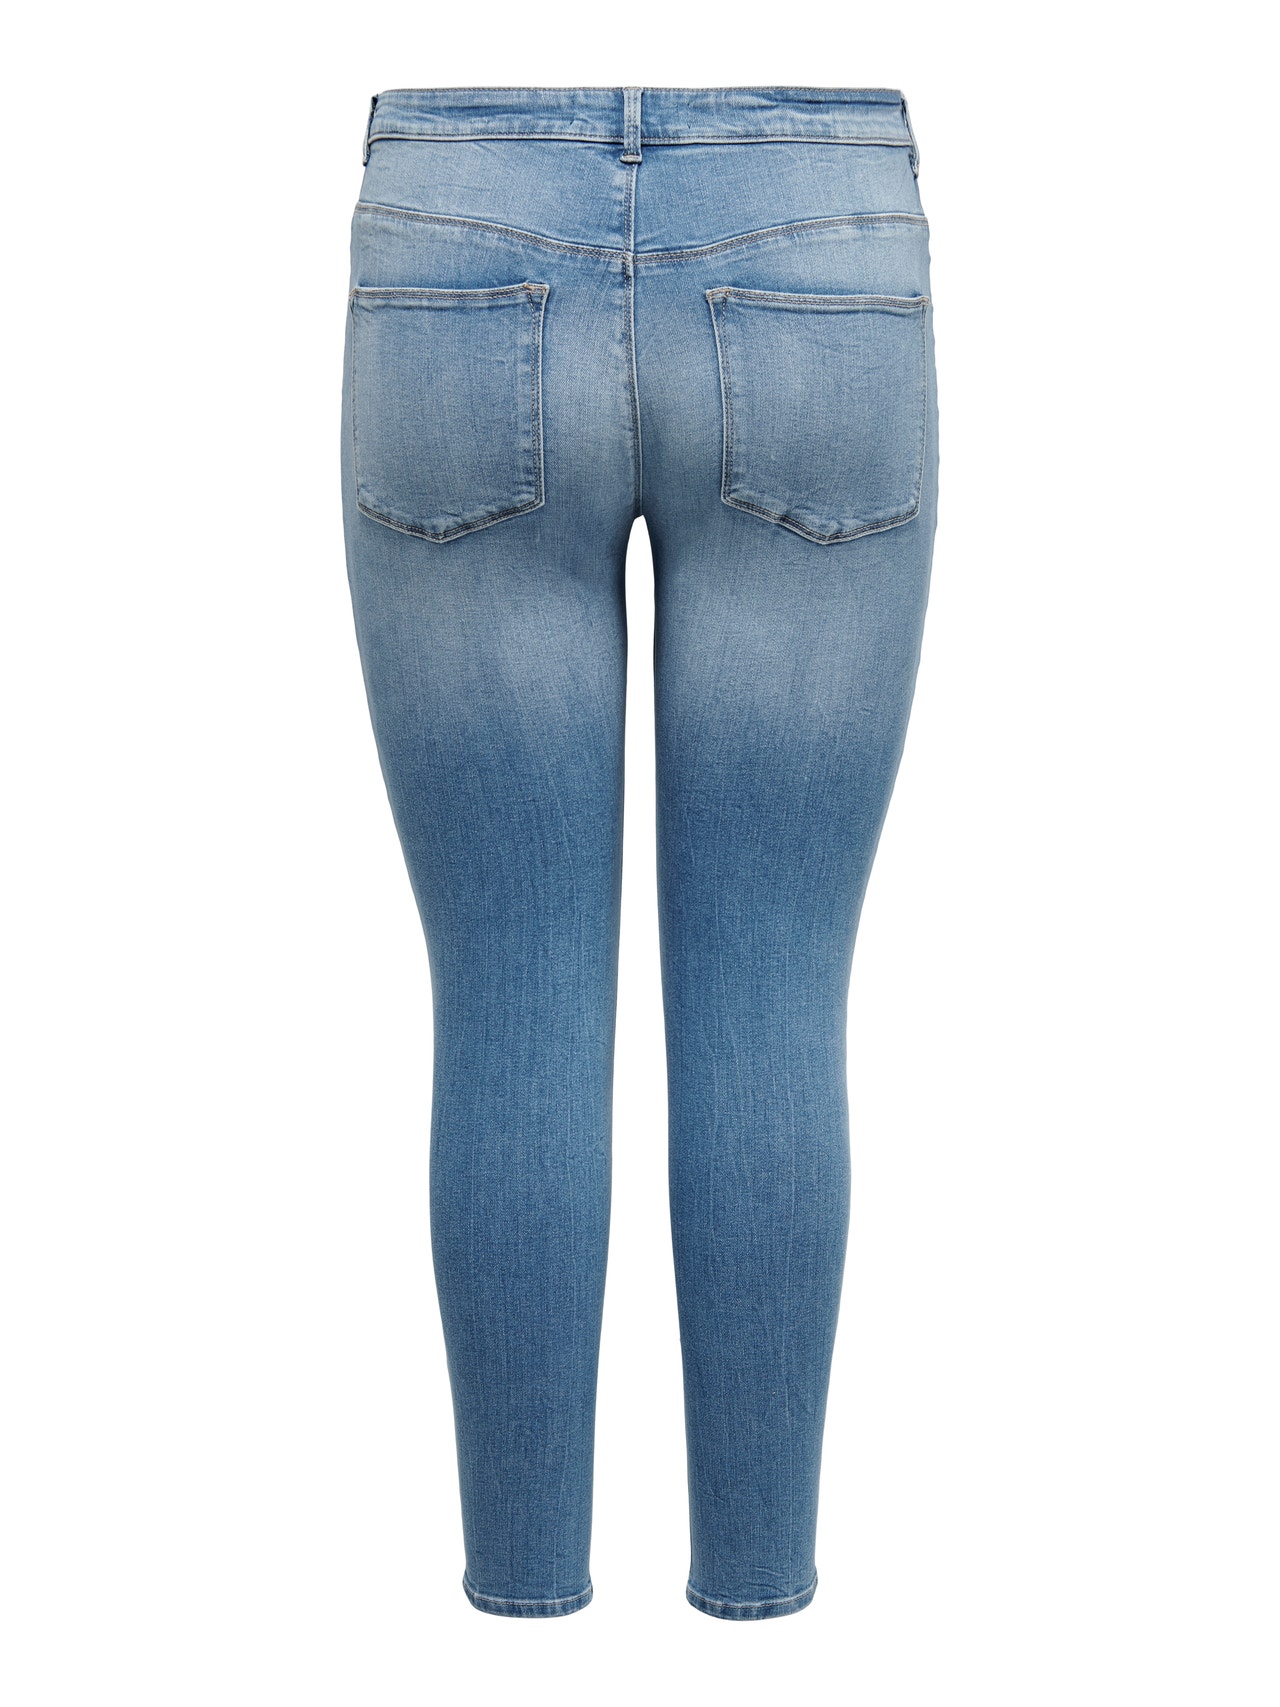 Soft Surroundings, Pants & Jumpsuits, 43 Soft Surroundings 6 8 Metro  Cotton Jeans Jeggings Pull On Pants W Buttons